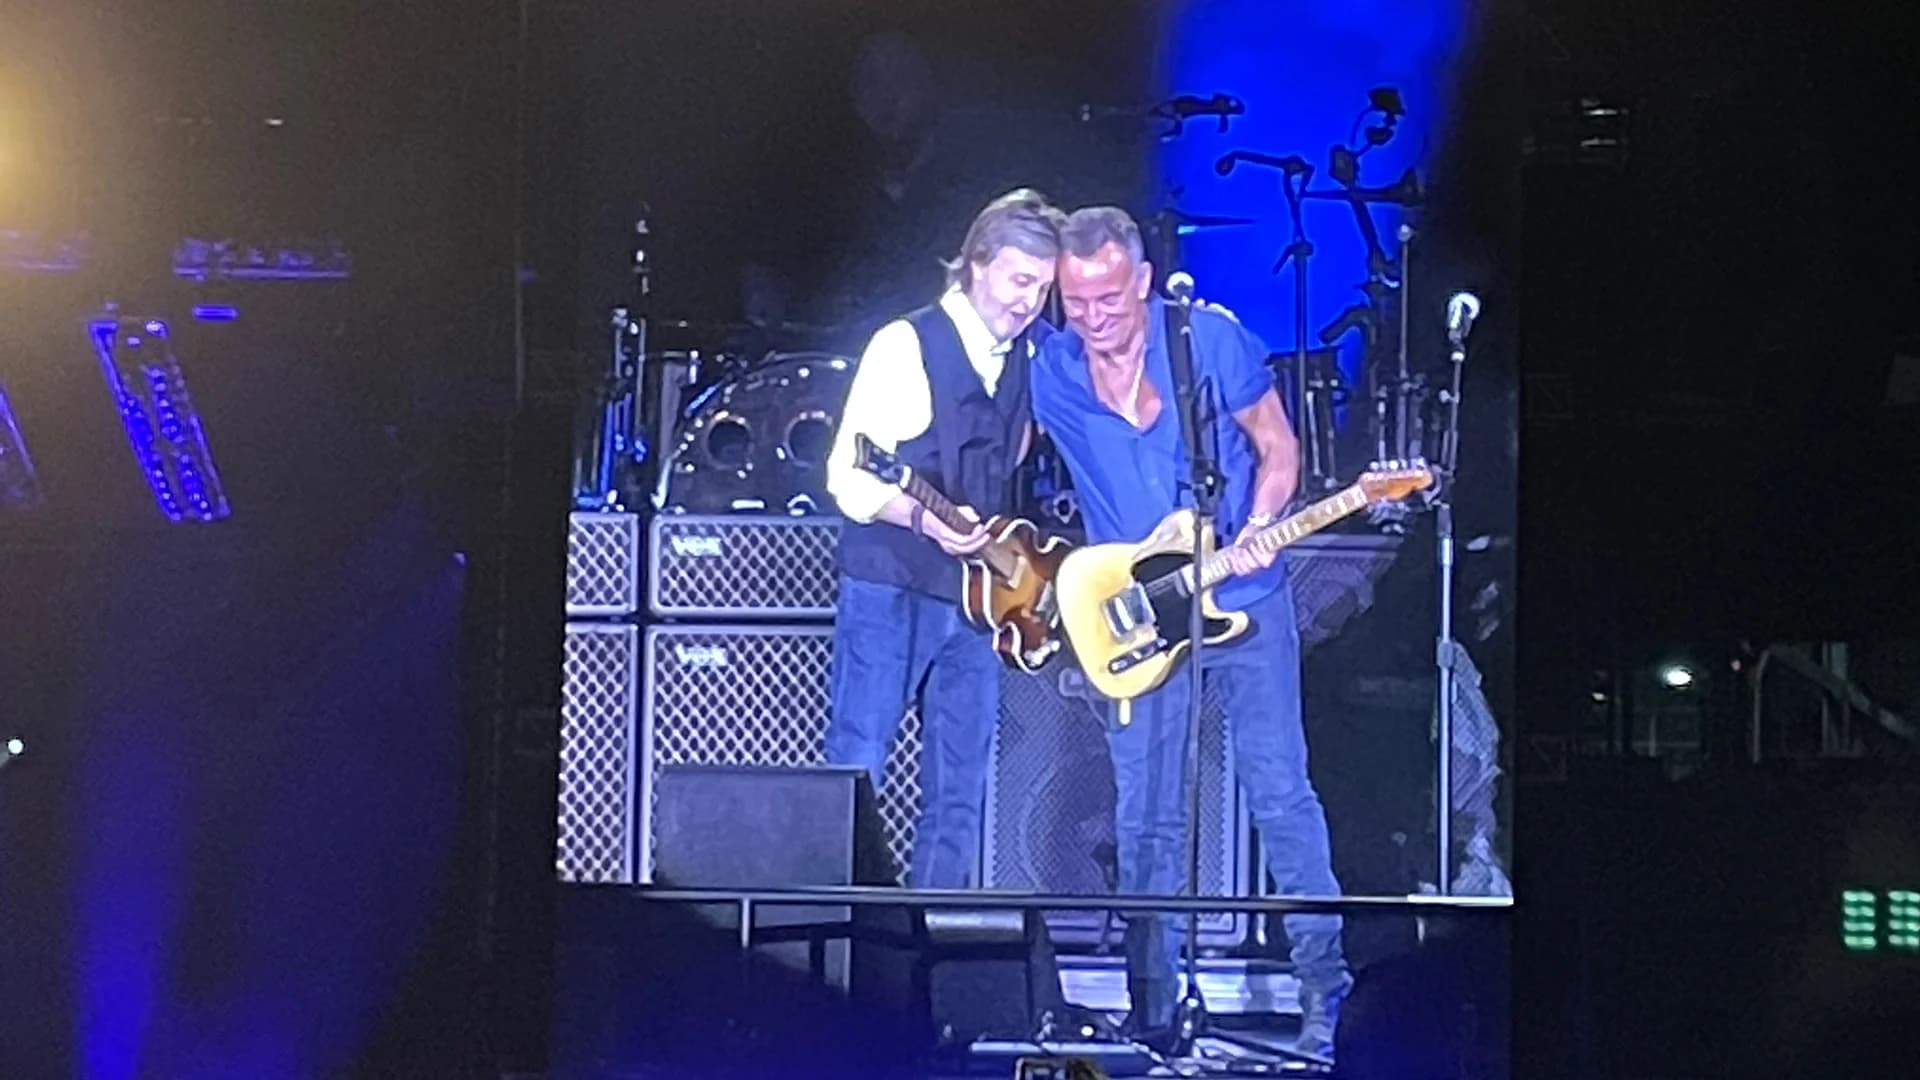 Paul McCartney jams with Bruce Springsteen at MetLife Stadium show